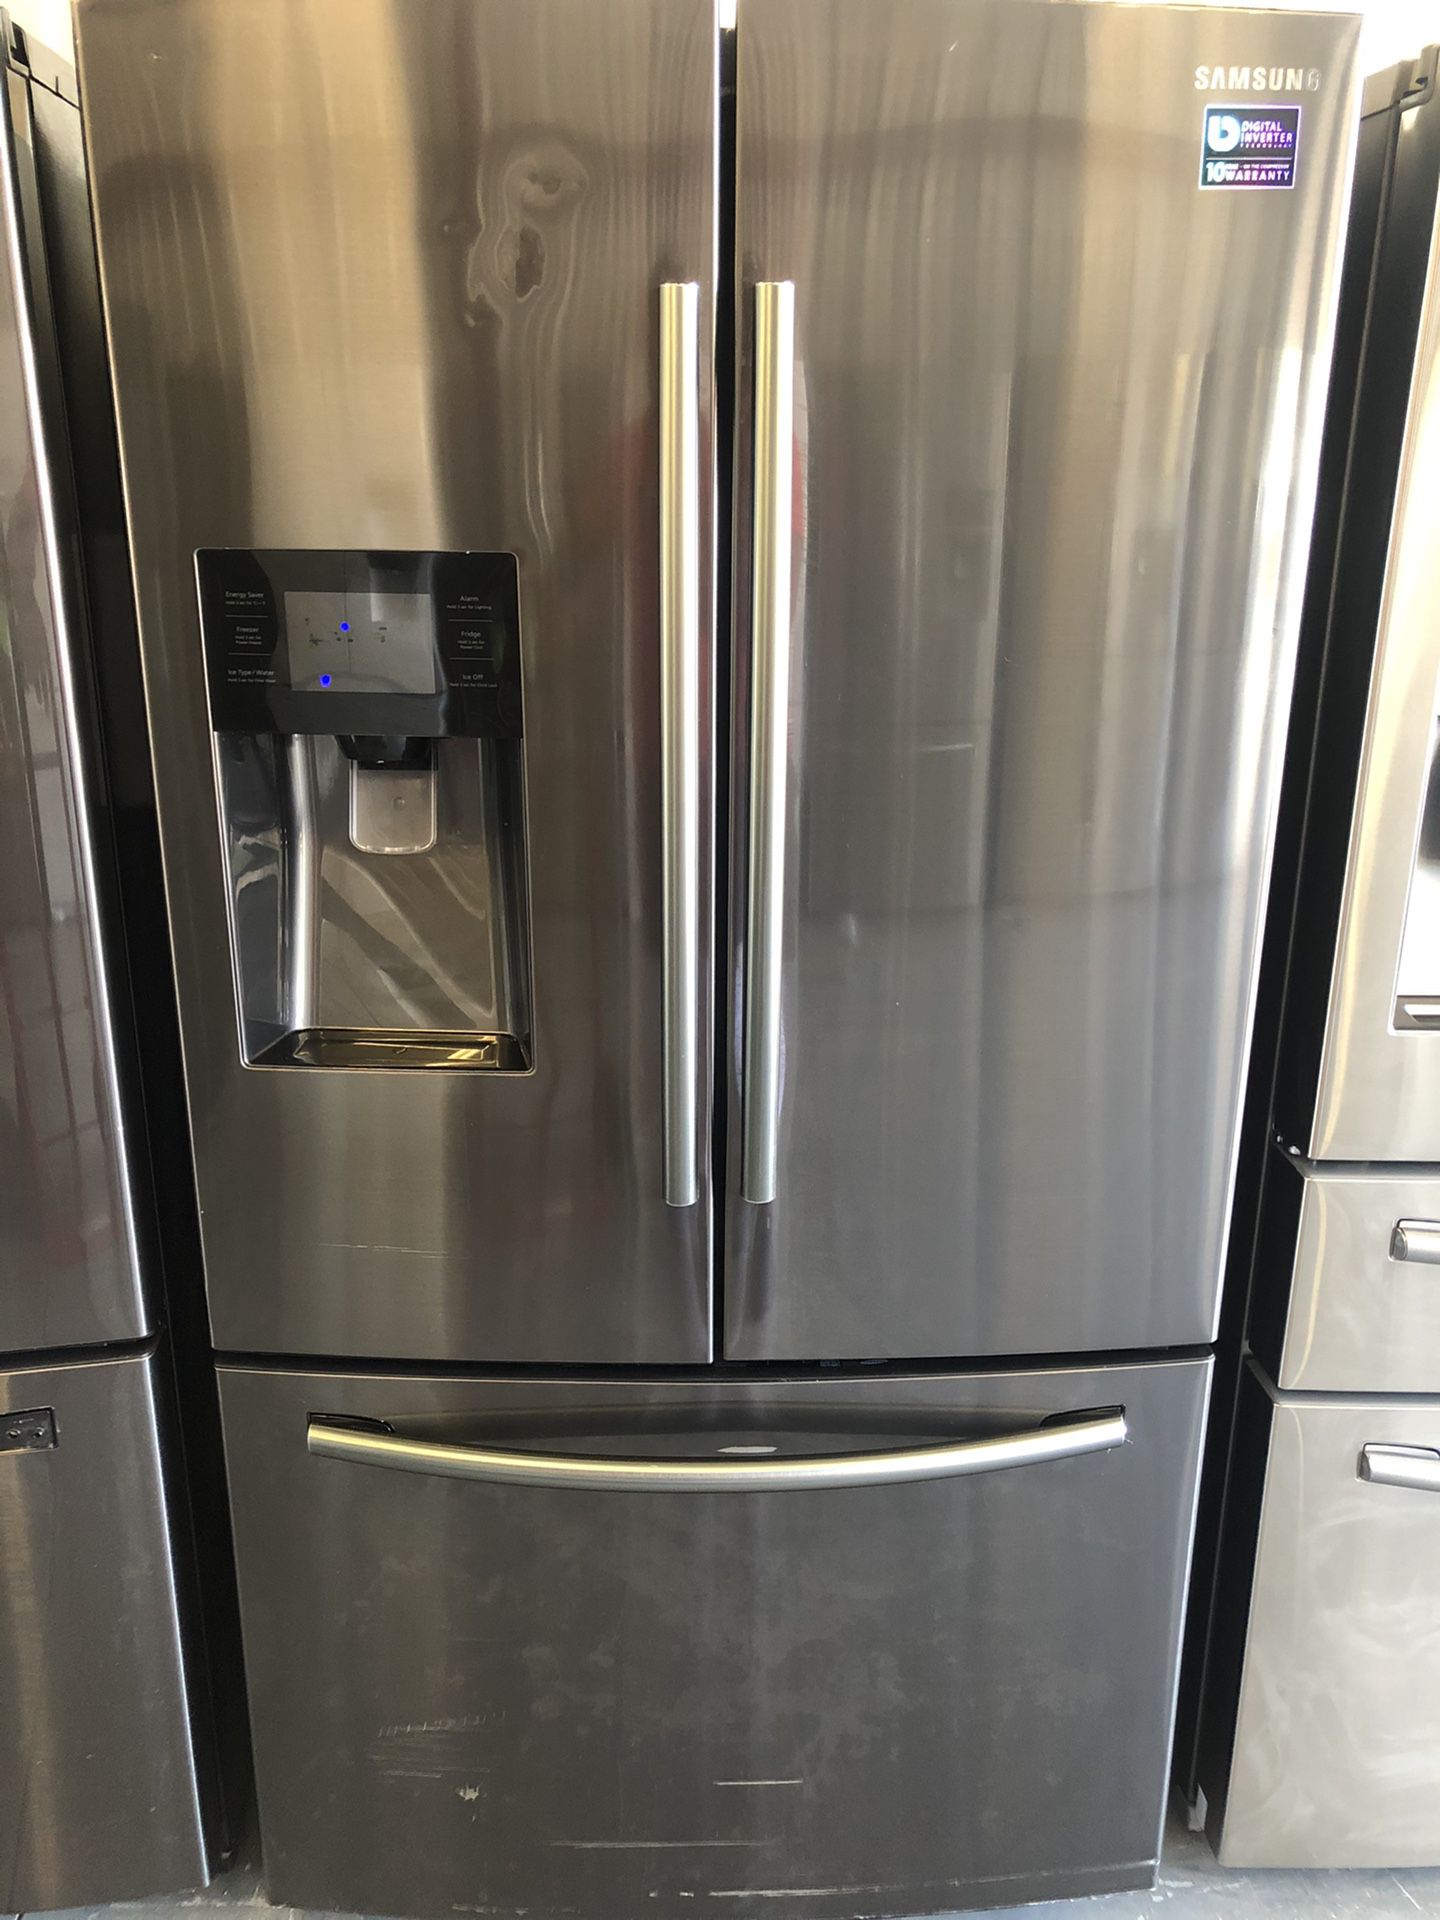 Black stainless Samsung refrigerator